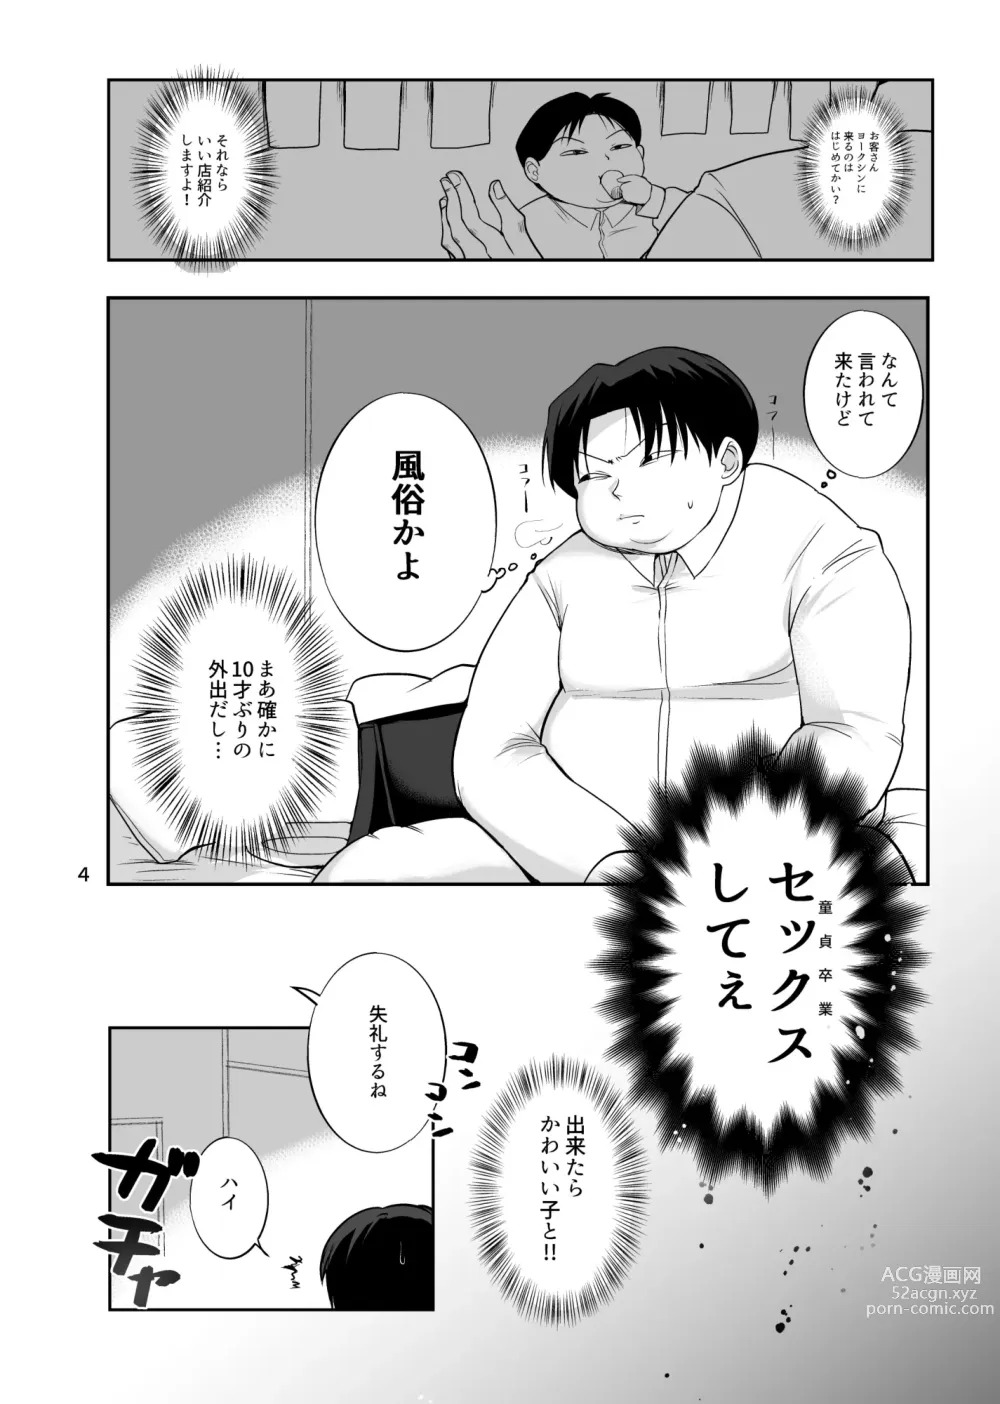 Page 2 of doujinshi Milluki ga GI o Kaenakatta Riyuu.